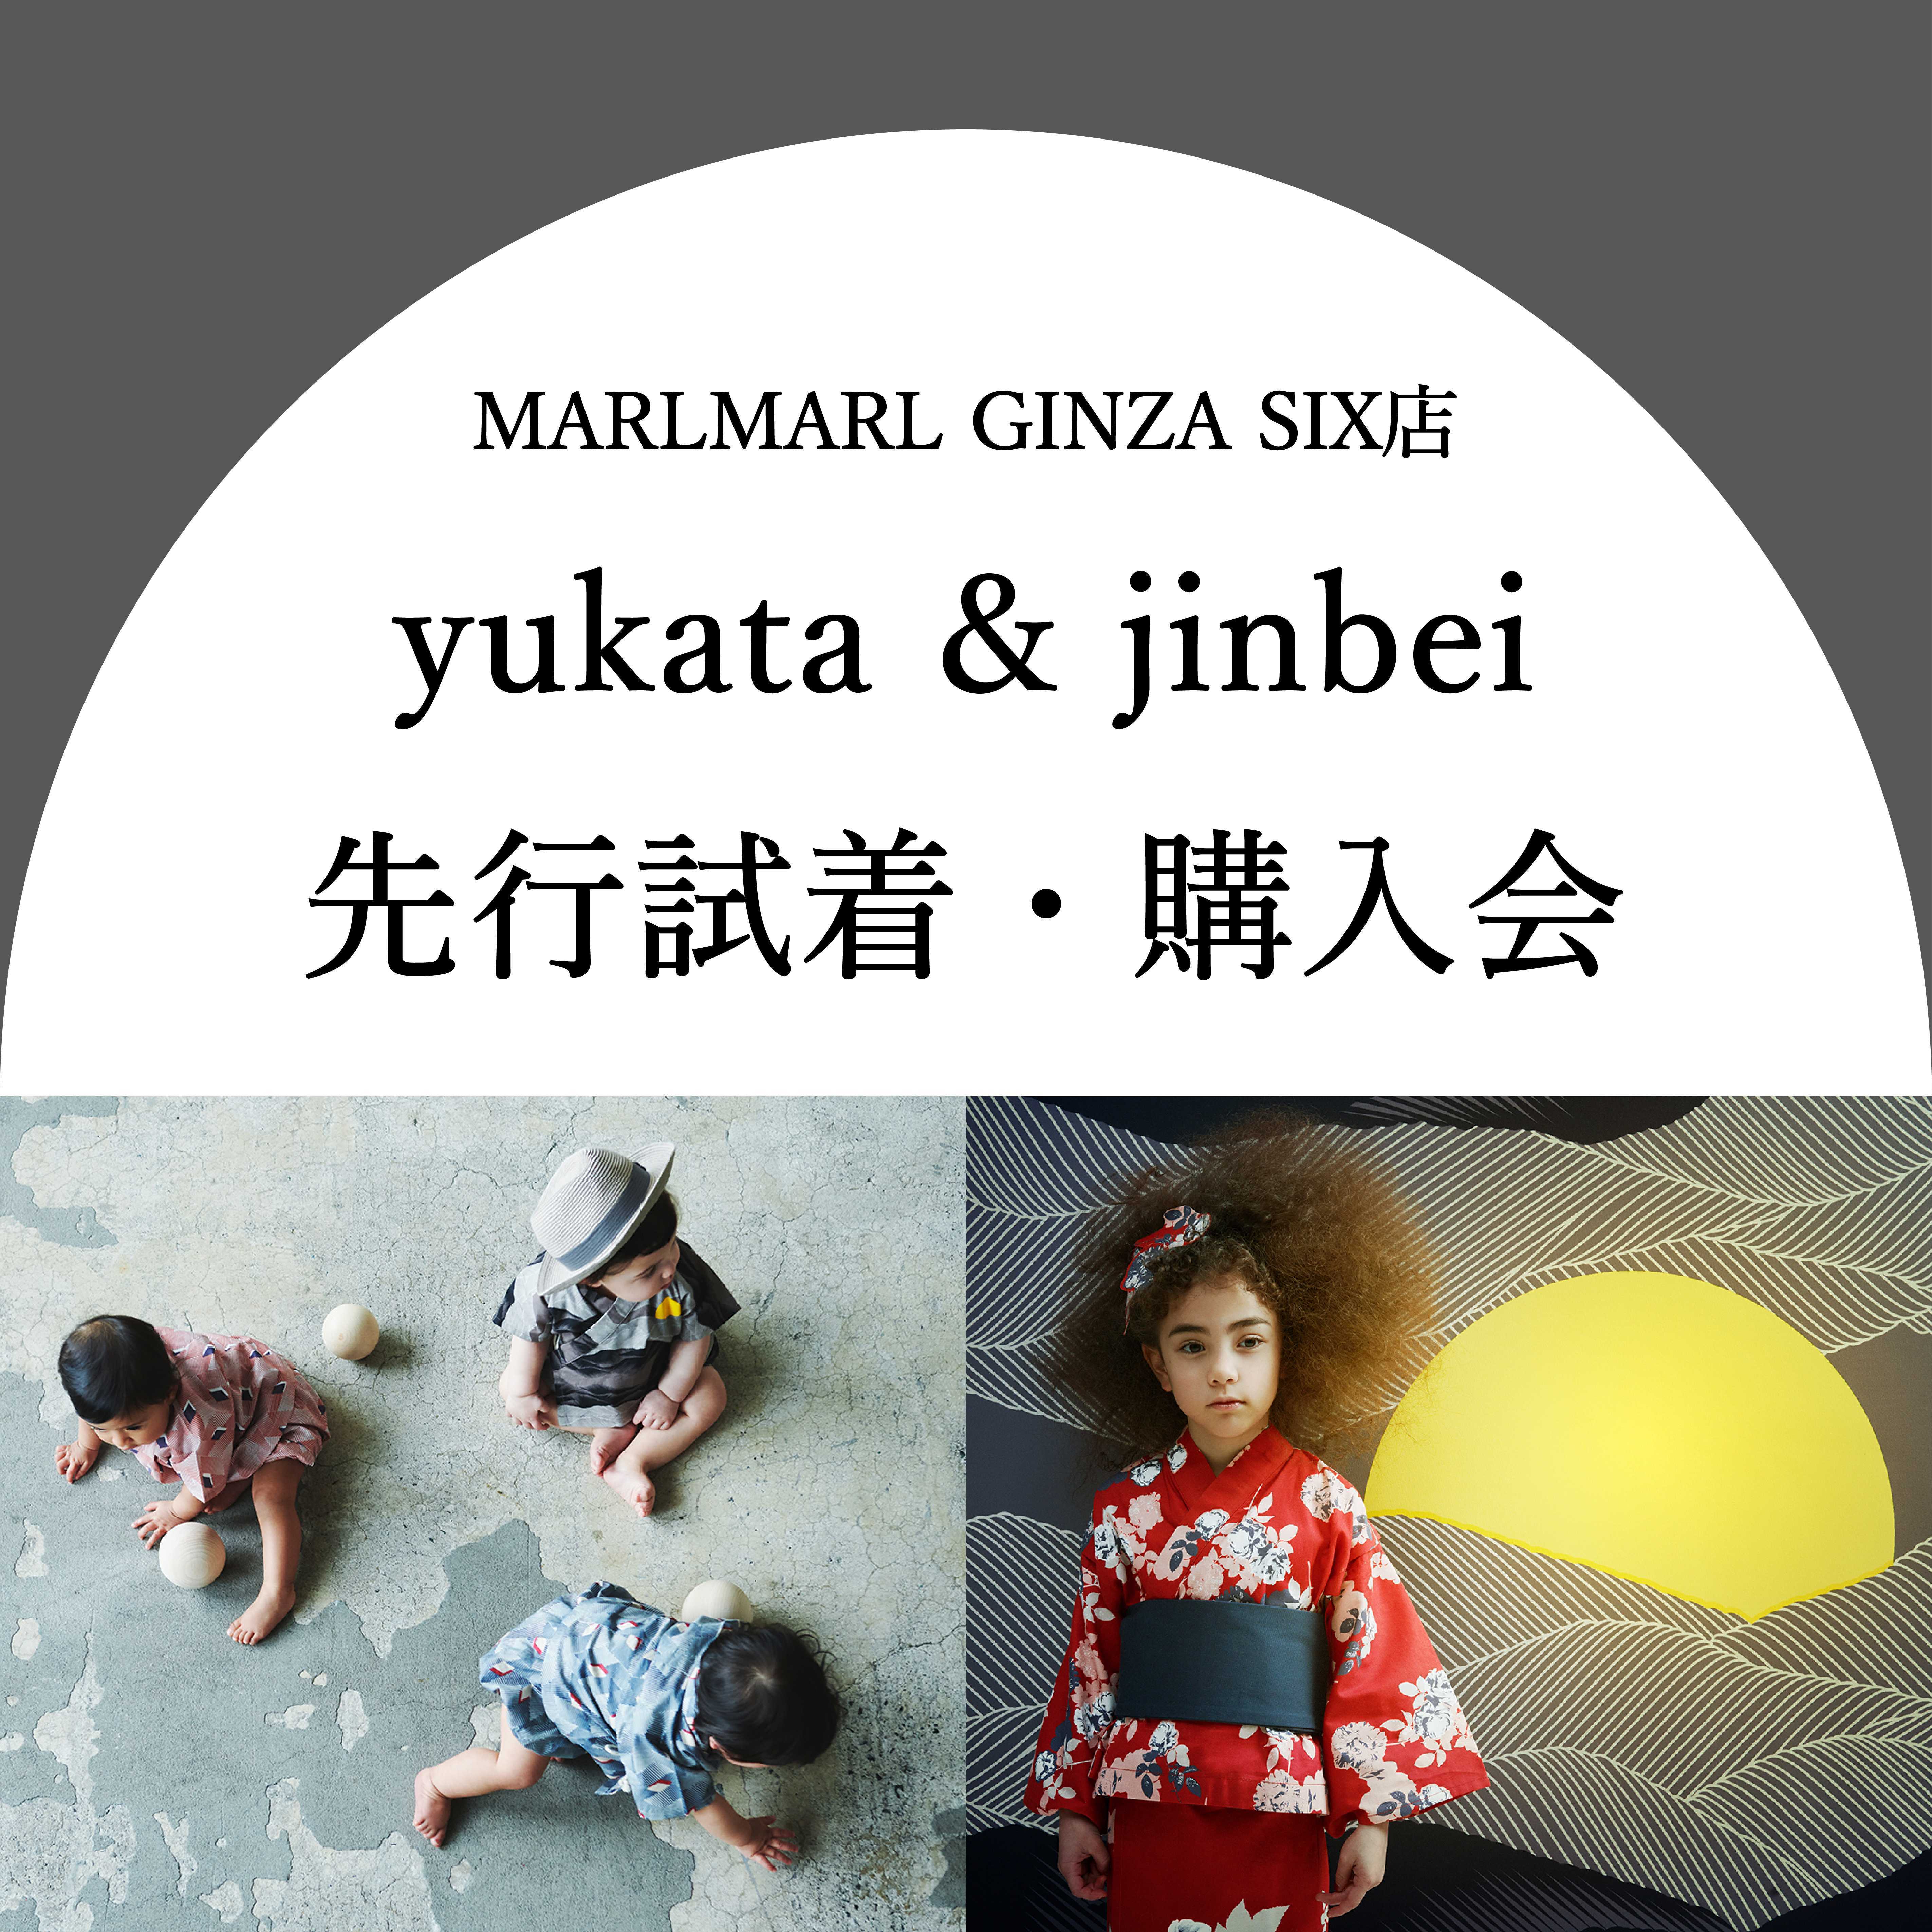 【GINZA SIX店】yukata & jinbei先行試着&購入会のお知らせ 4.13(WED.)